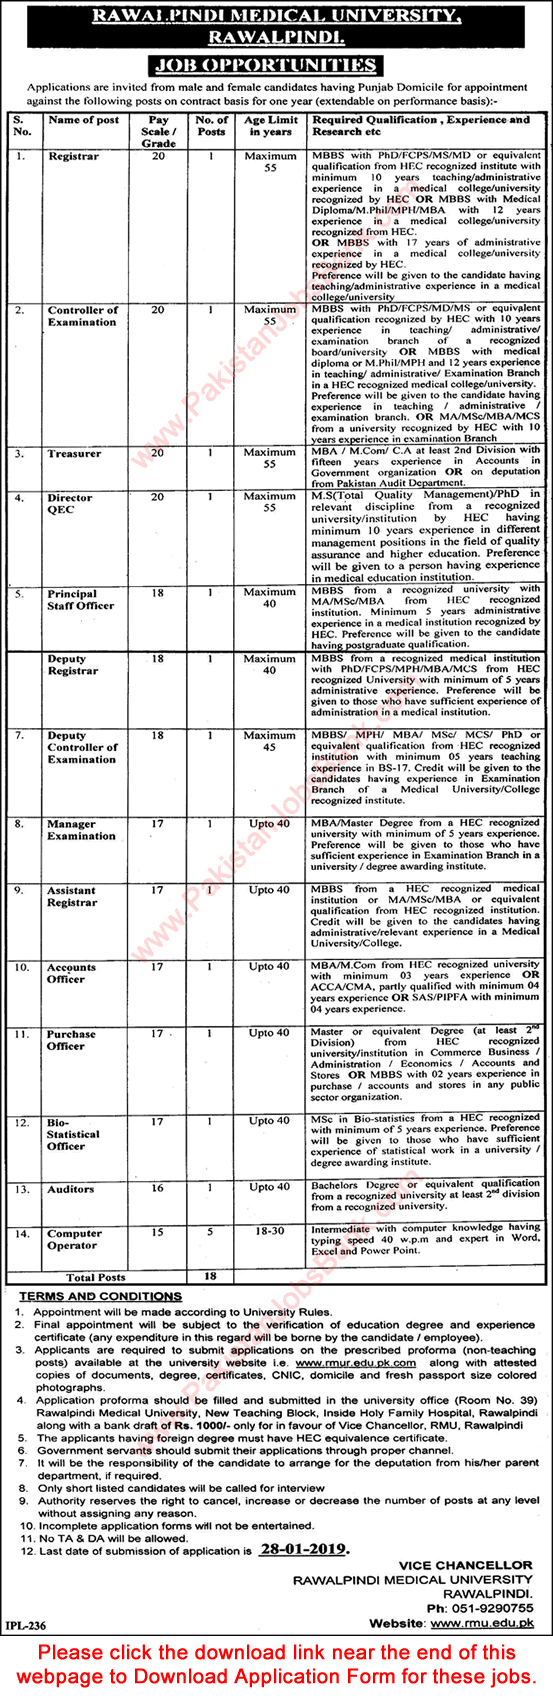 Rawalpindi Medical University Jobs 2019 Application Form Computer Operators & Others Latest